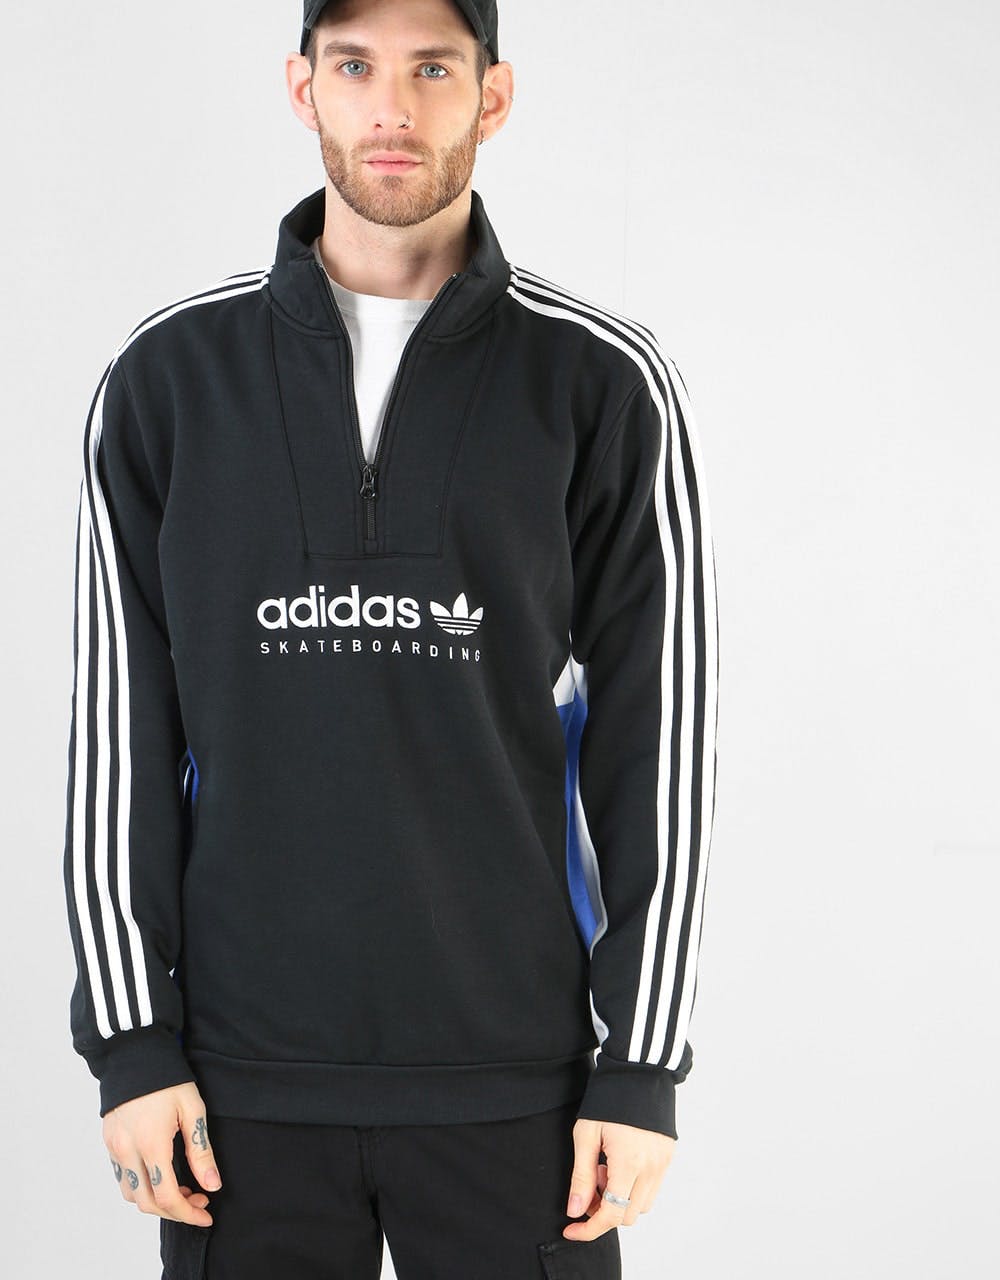 Adidas Apian Half-Zip Sweatshirt - Black/White/Active Blue